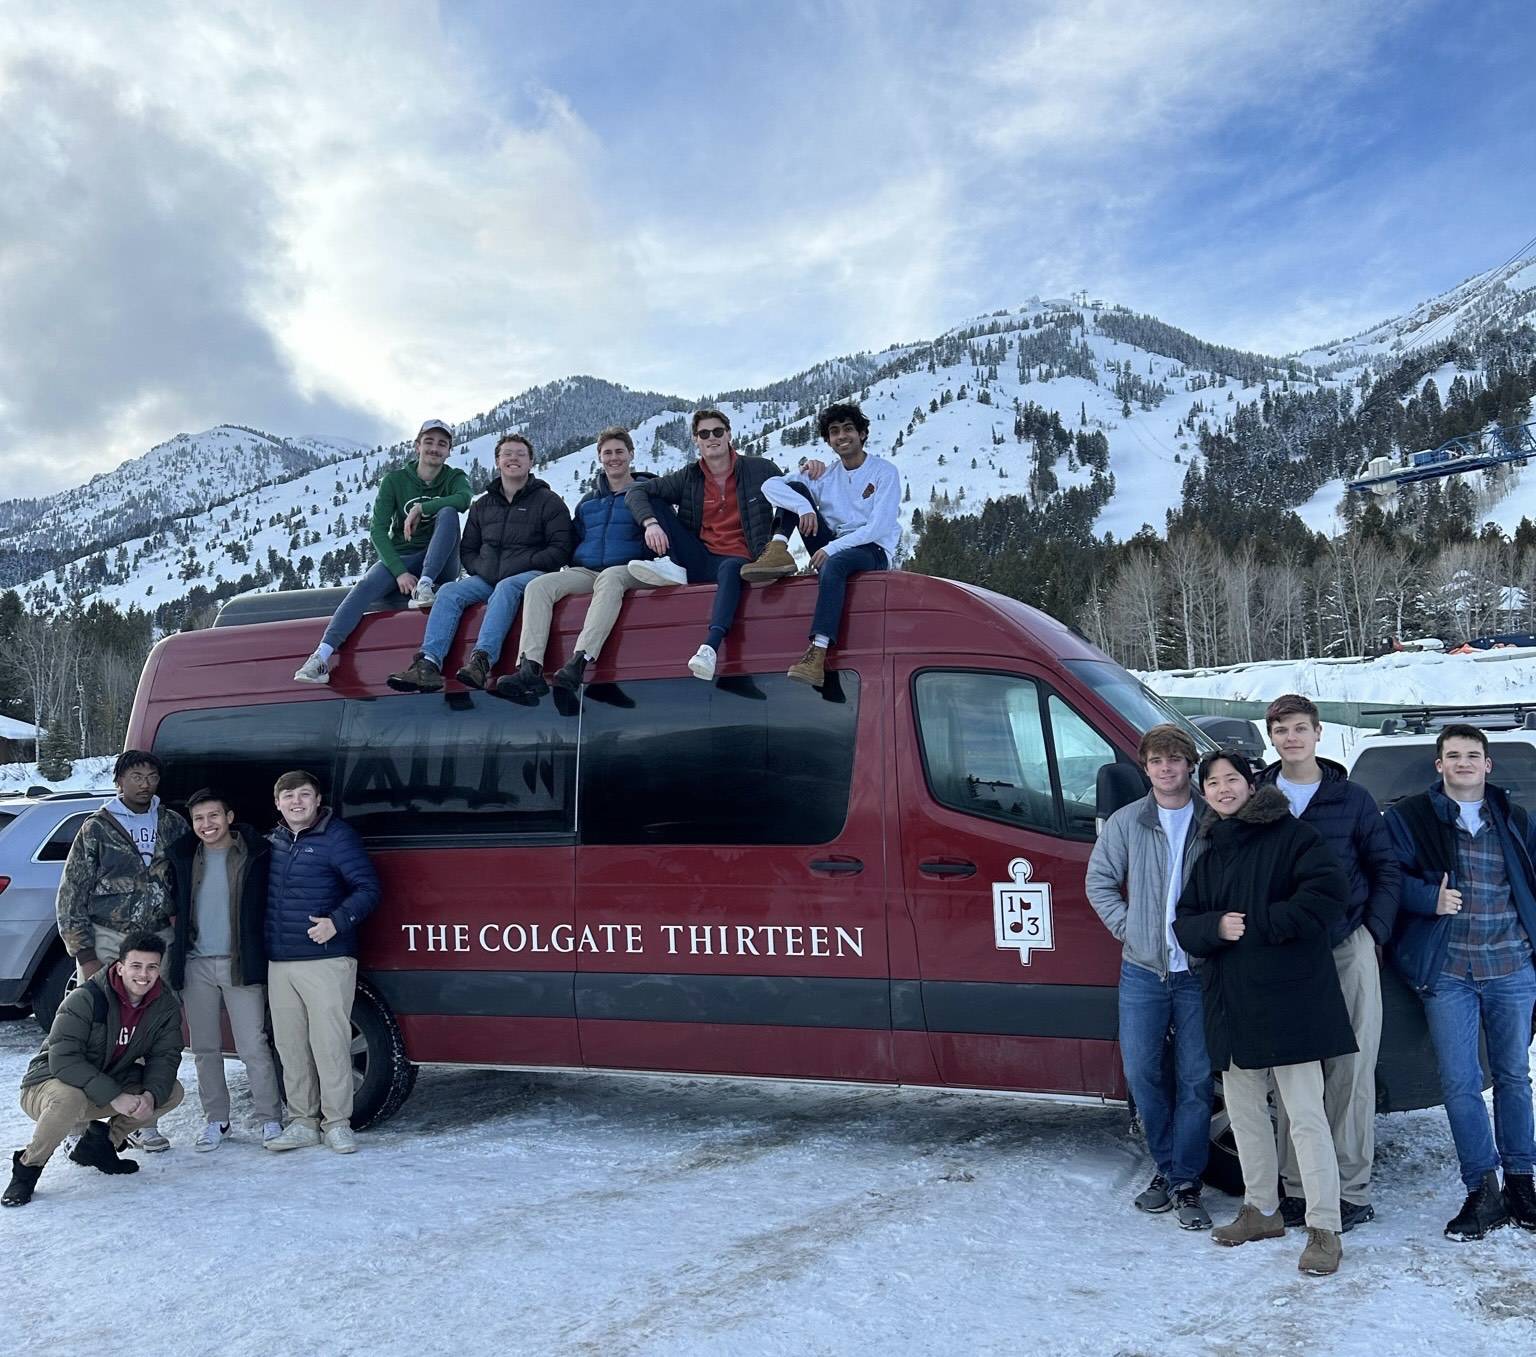 Members of the Colgate Thirteen gathered around their van